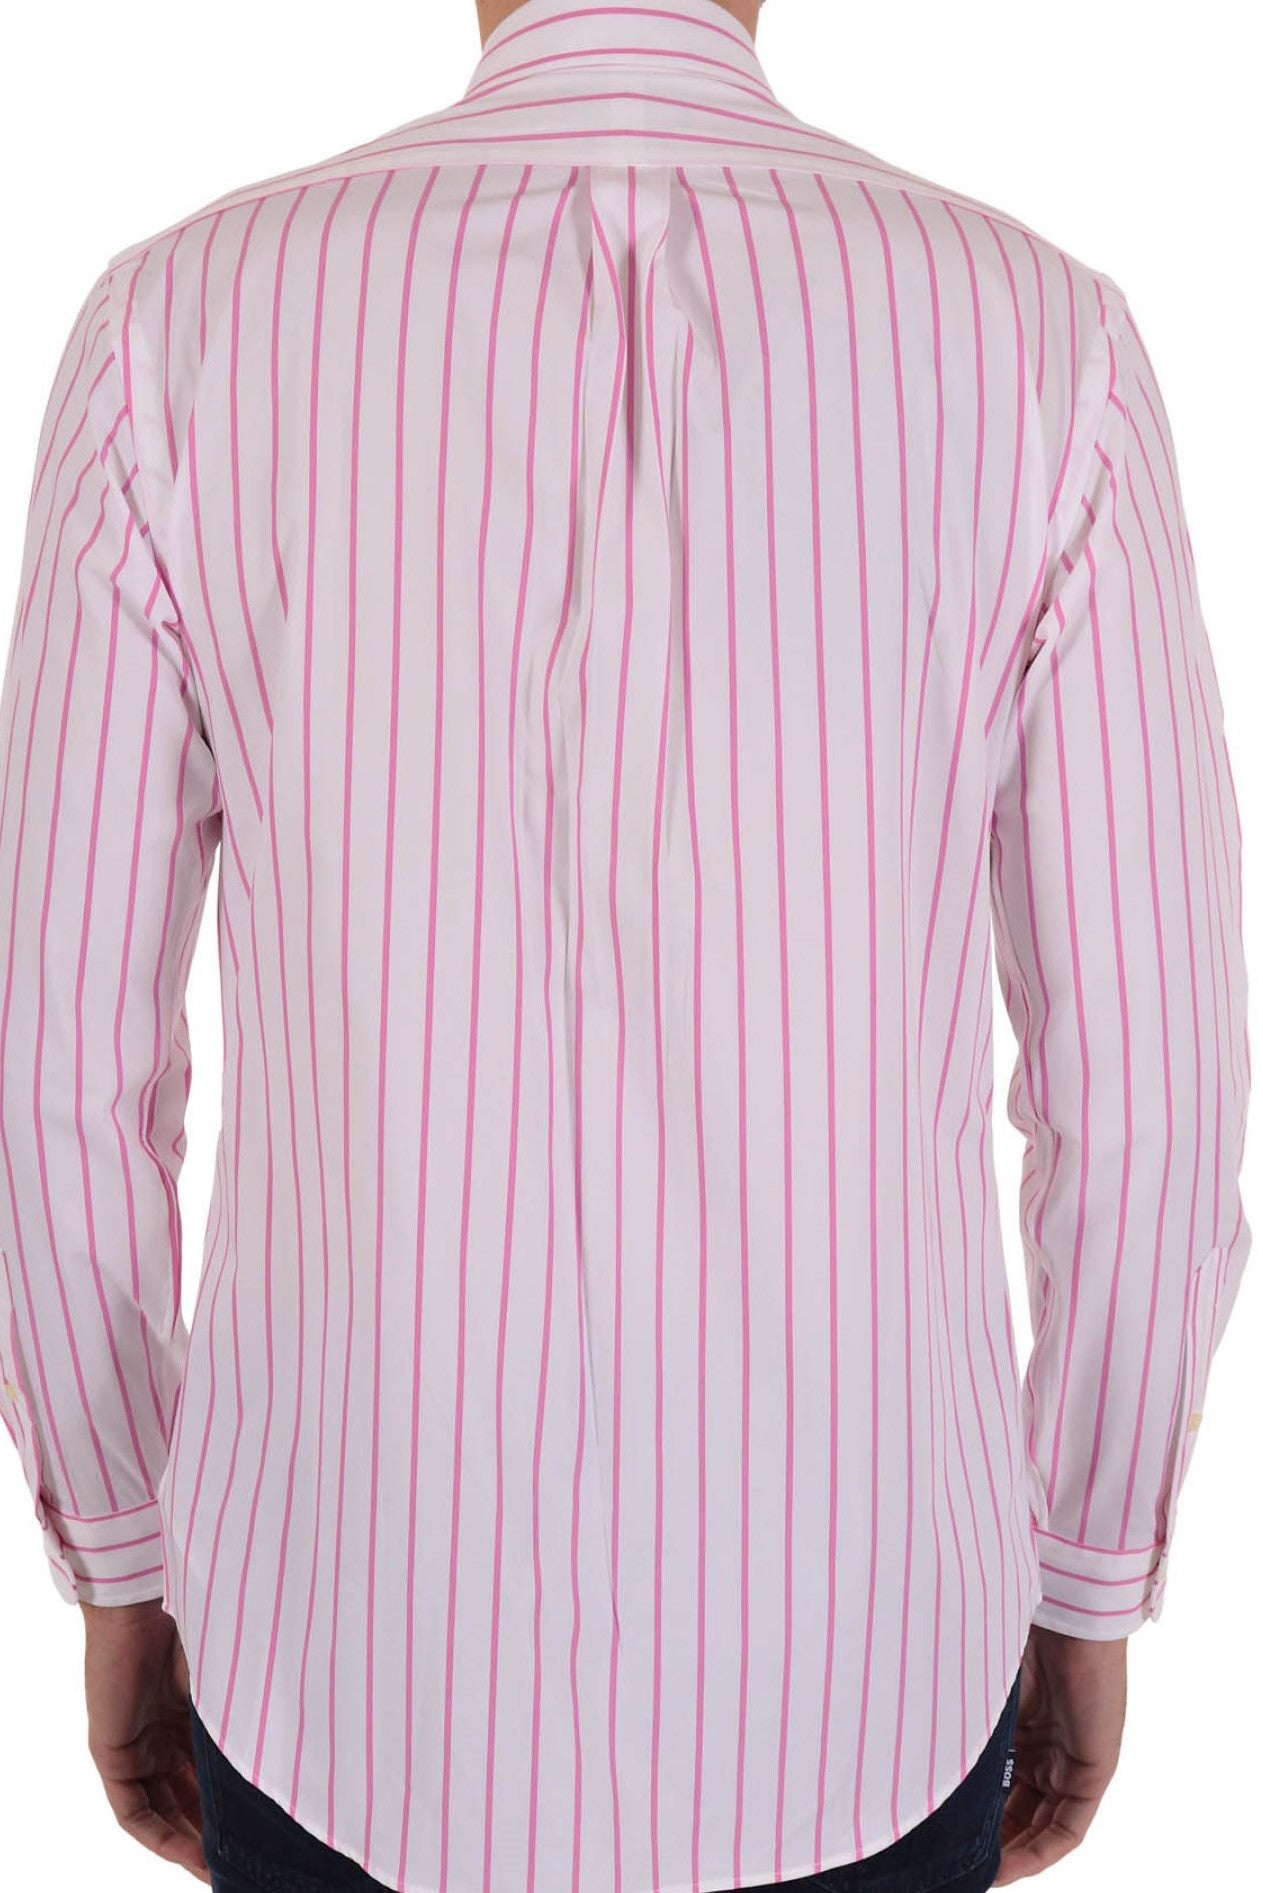 Ralph Lauren Shirt with Stripes | Resort Rose / White